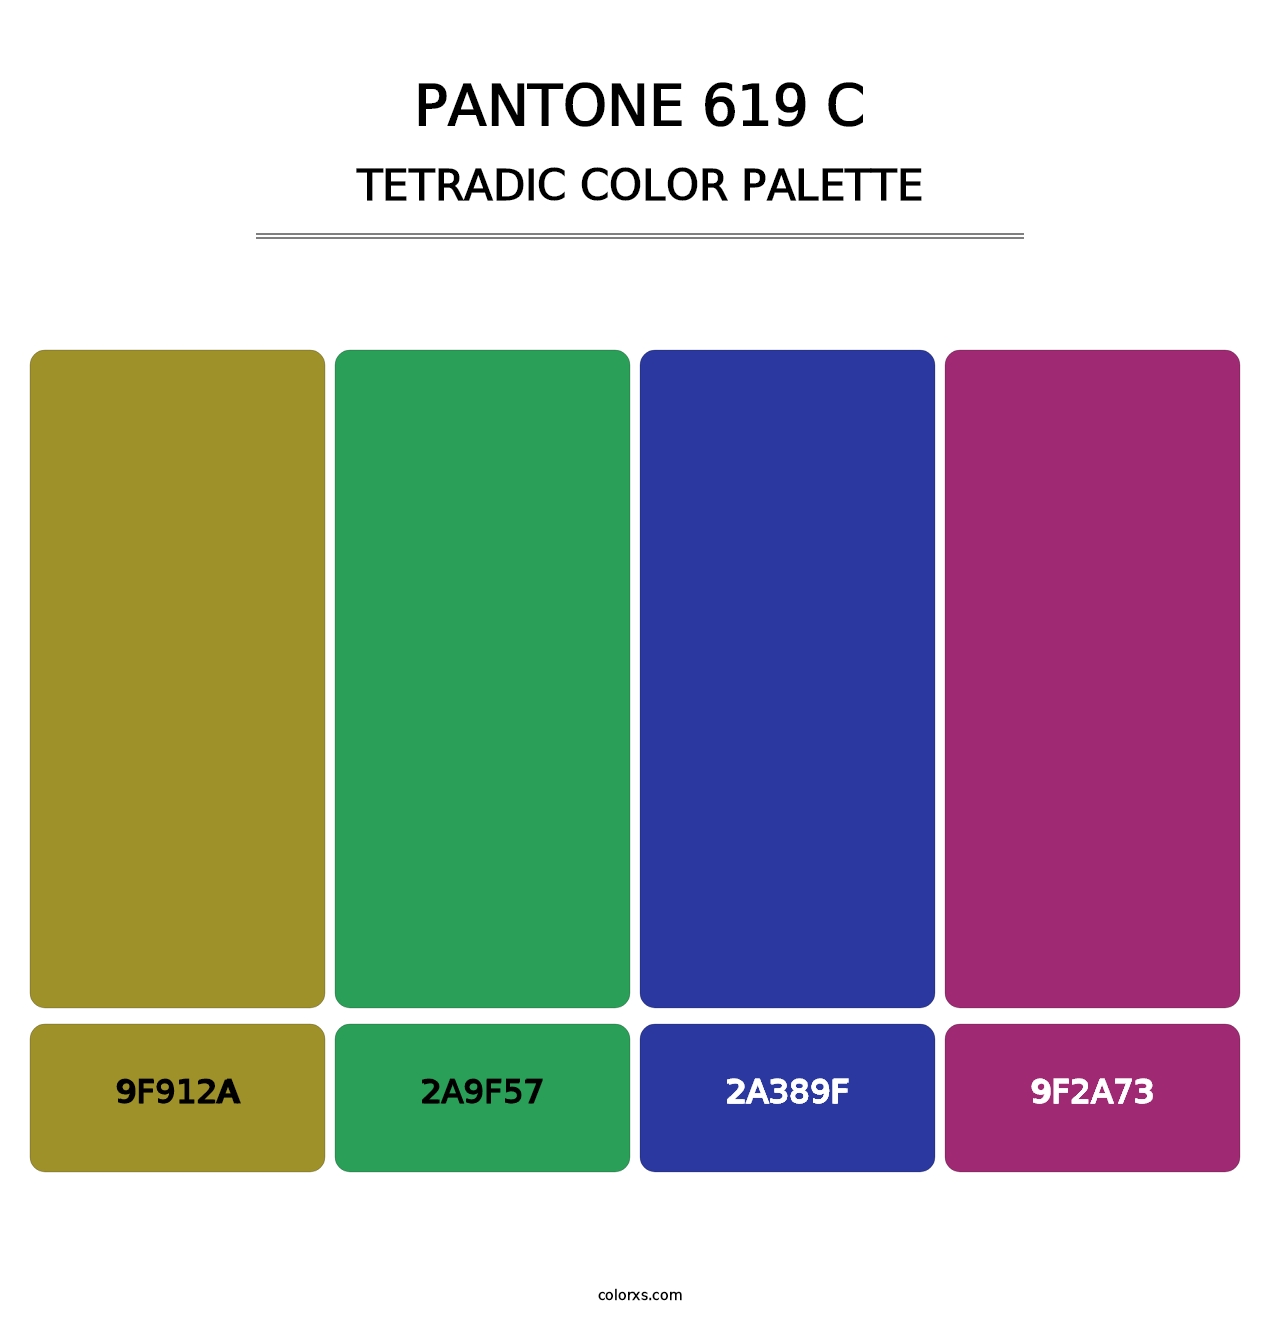 PANTONE 619 C - Tetradic Color Palette